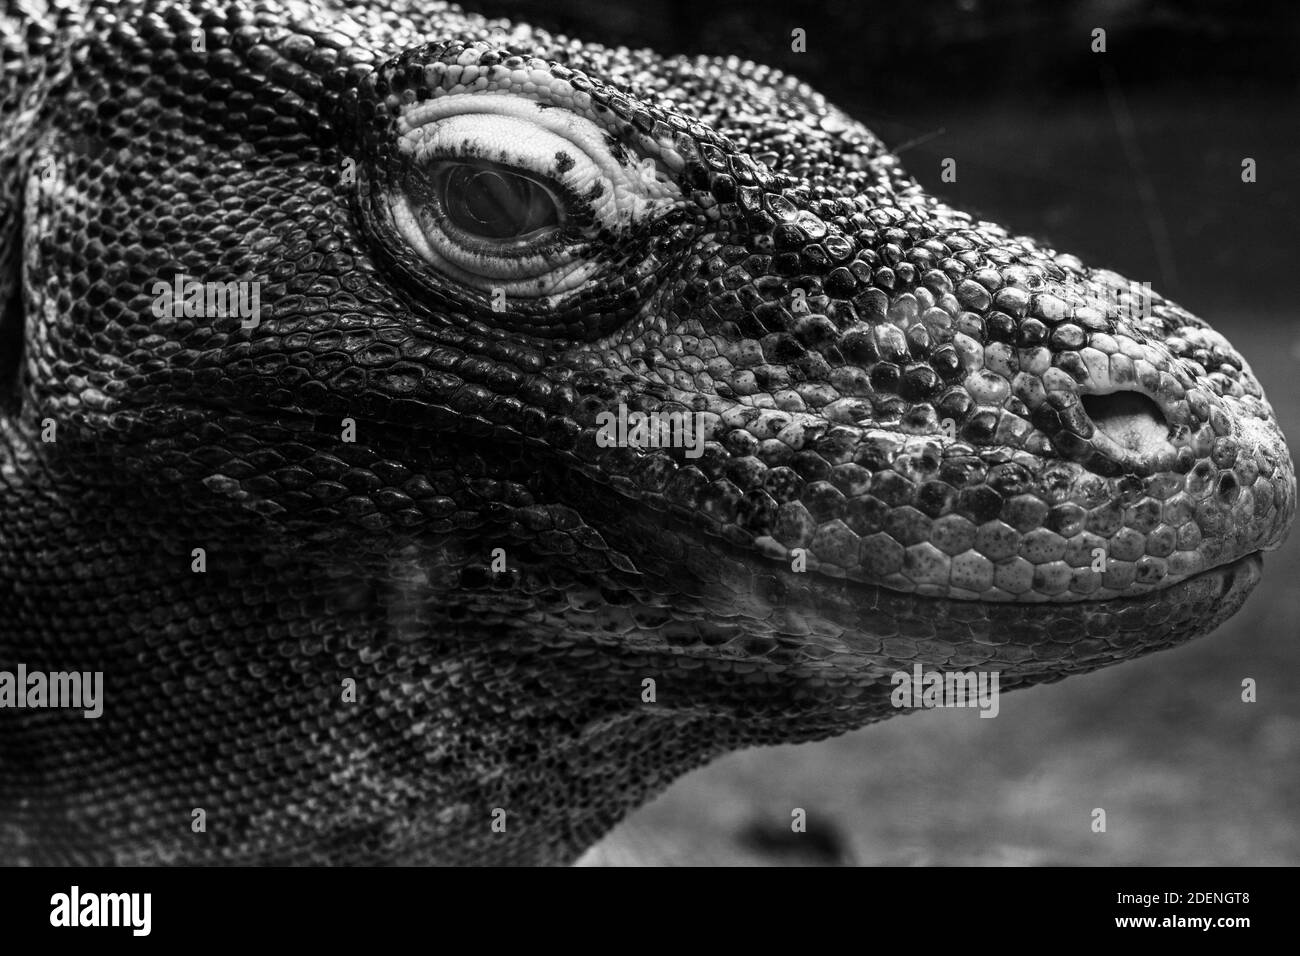 The serious gaze of a most deadly apex predator, the komodo dragon. Stock Photo